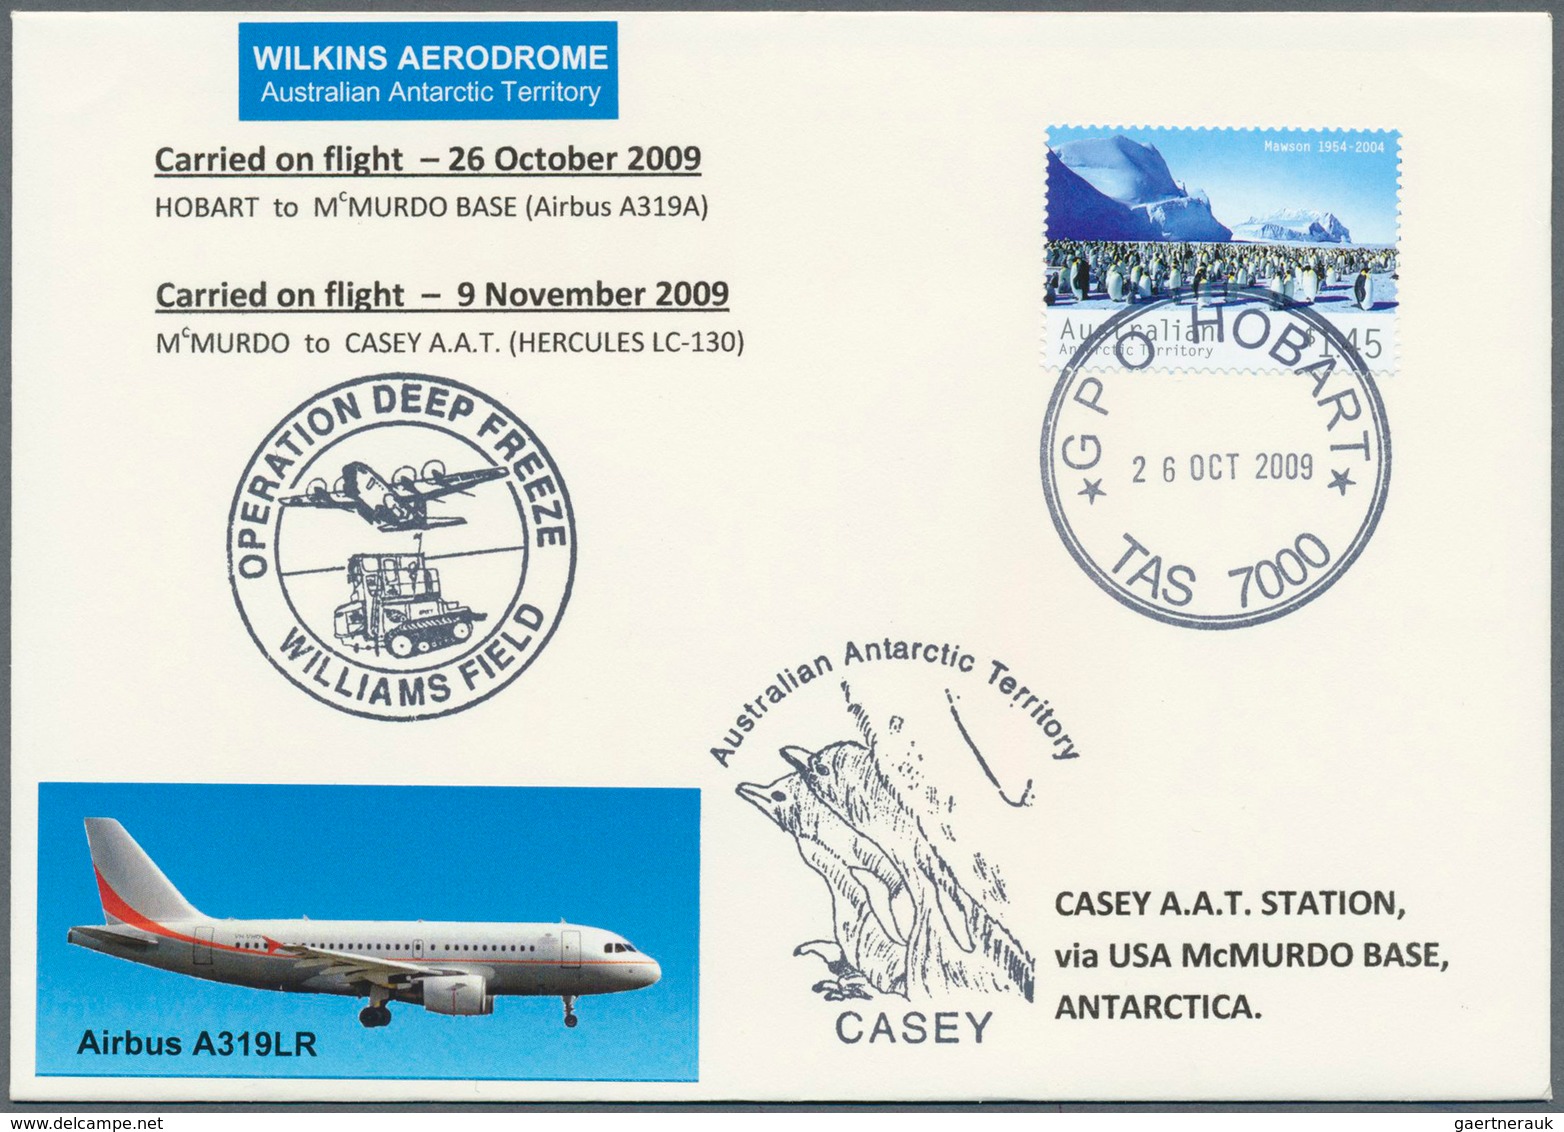 22233 Australien - Antarktische Gebiete: 1954/2010, extraordinary collection/accumulation of covers/cards/